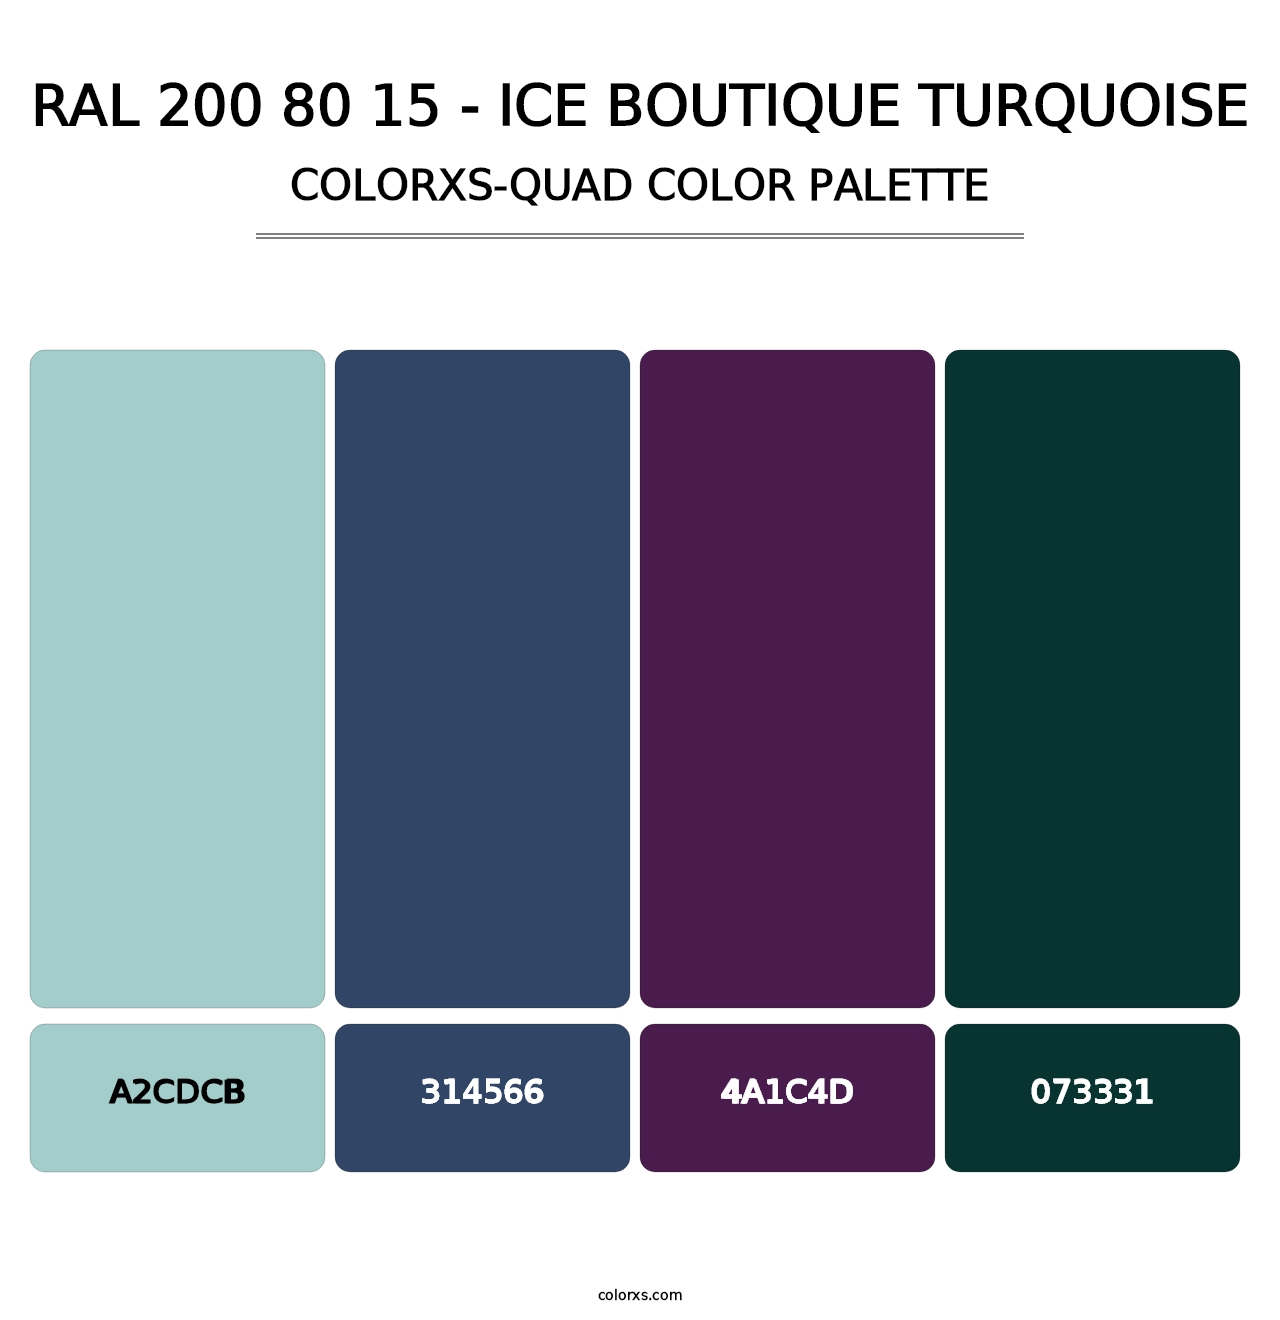 RAL 200 80 15 - Ice Boutique Turquoise - Colorxs Quad Palette